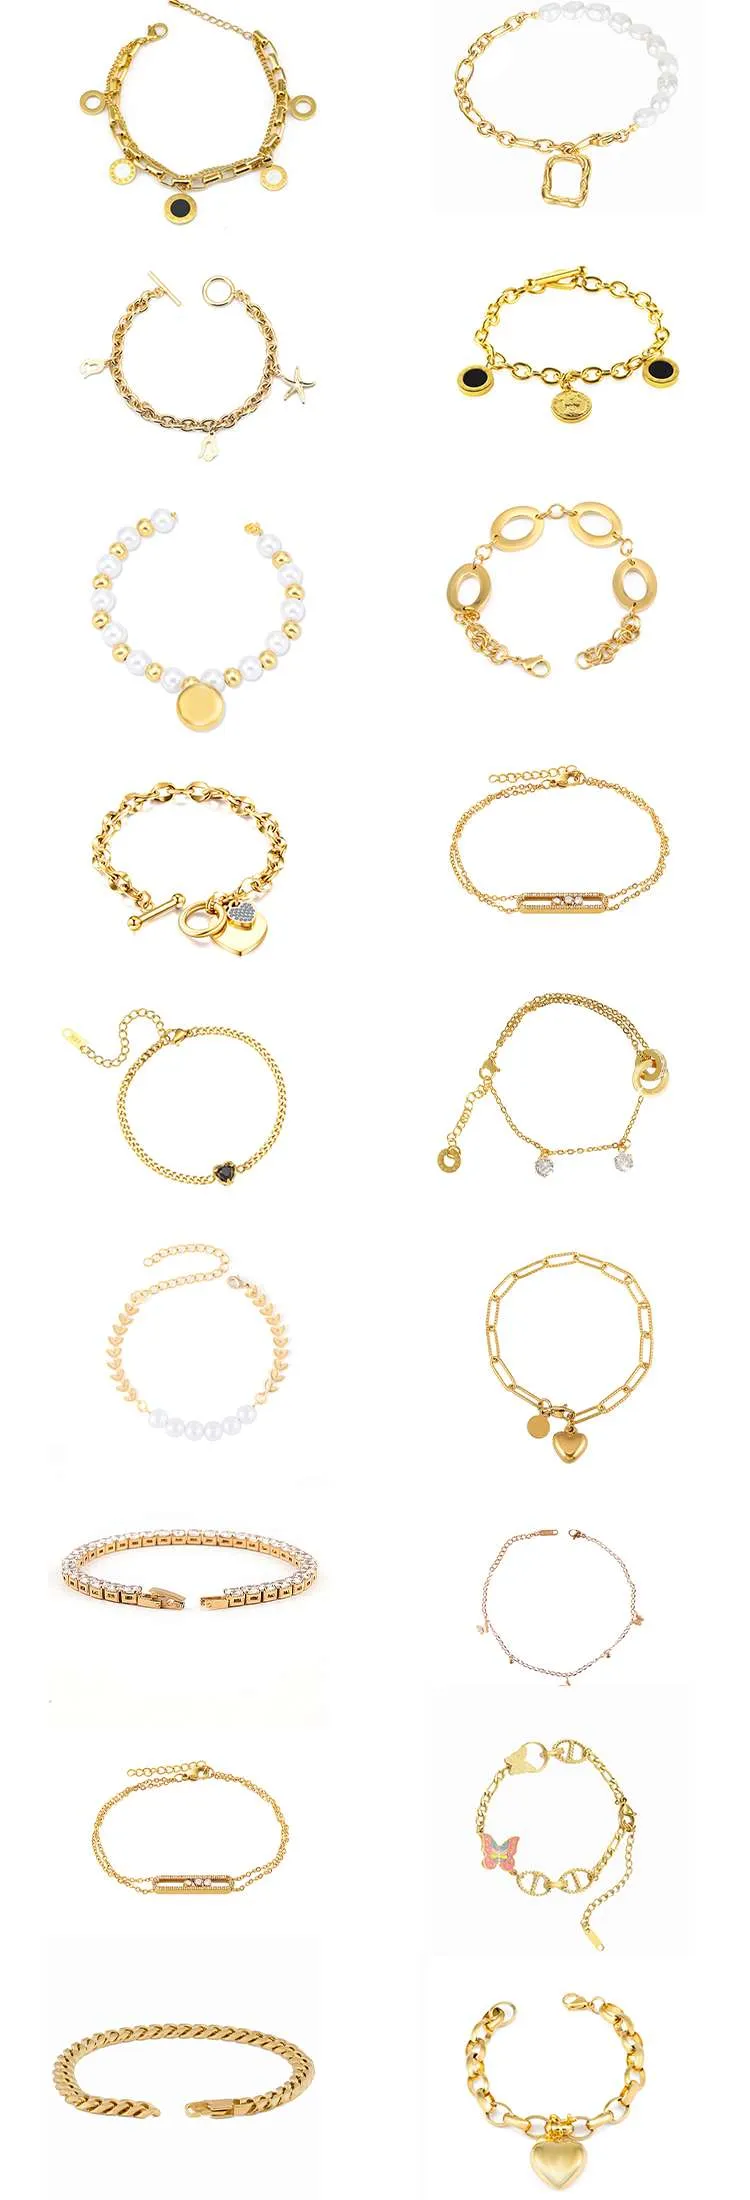 Customized women's bracelets